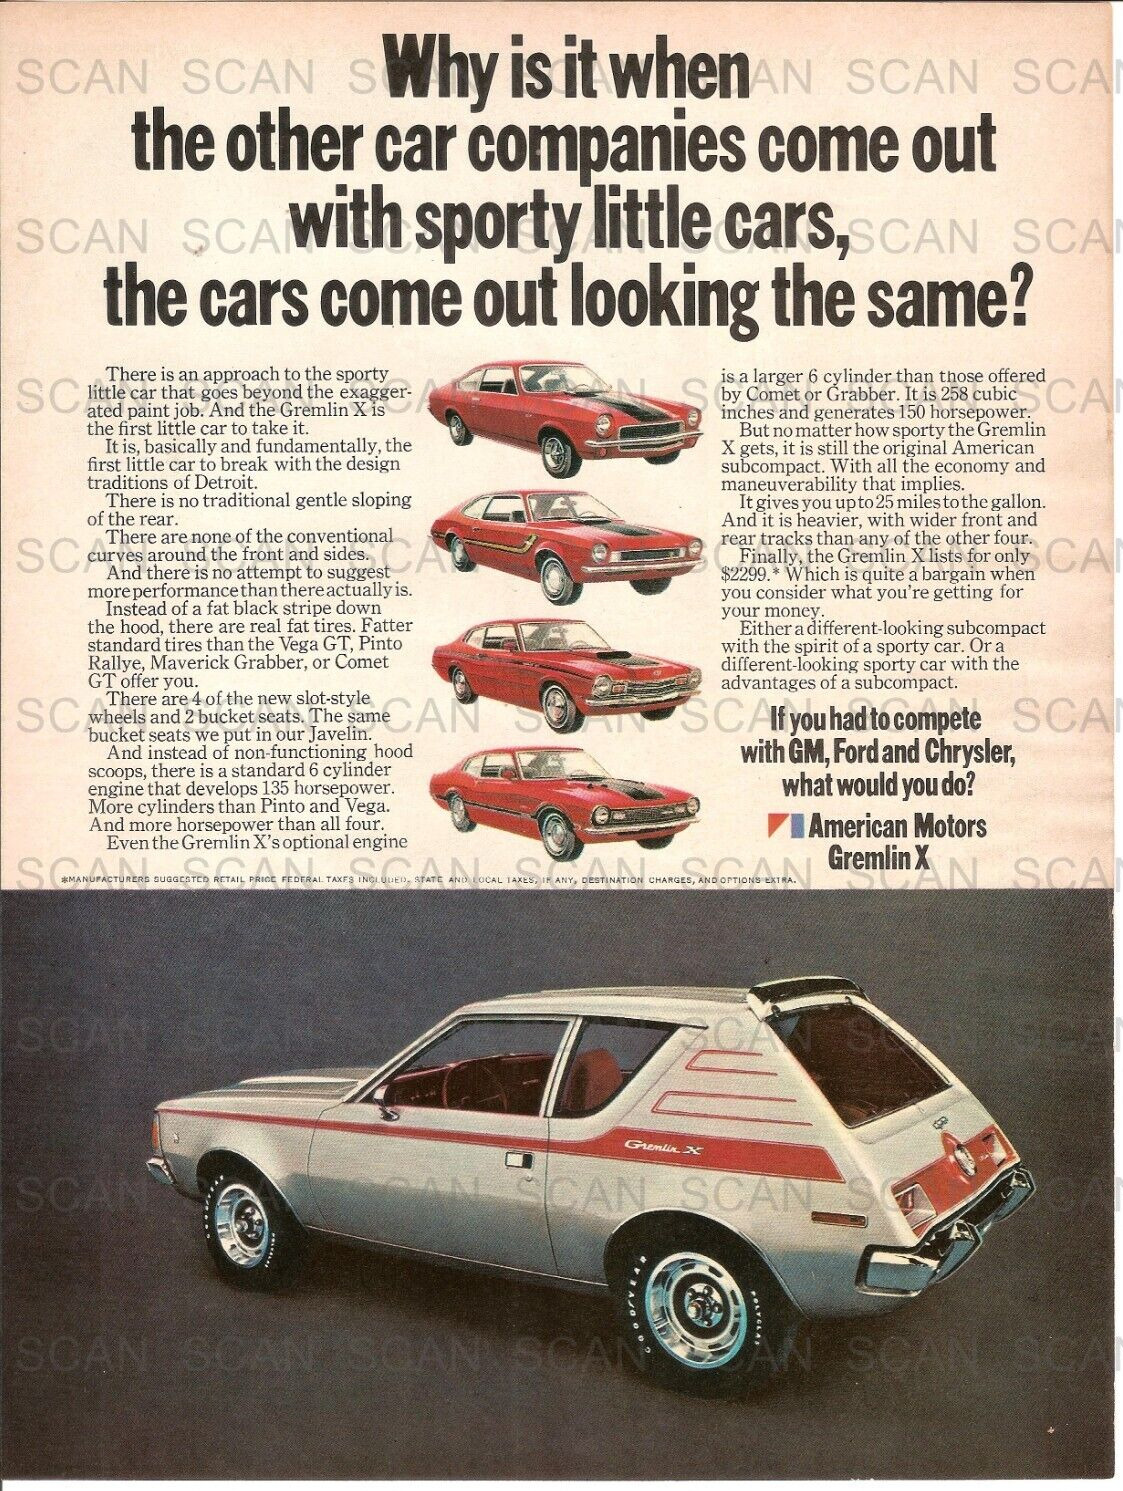 1971 American Motors Gremlin X Vintage Magazine Ad